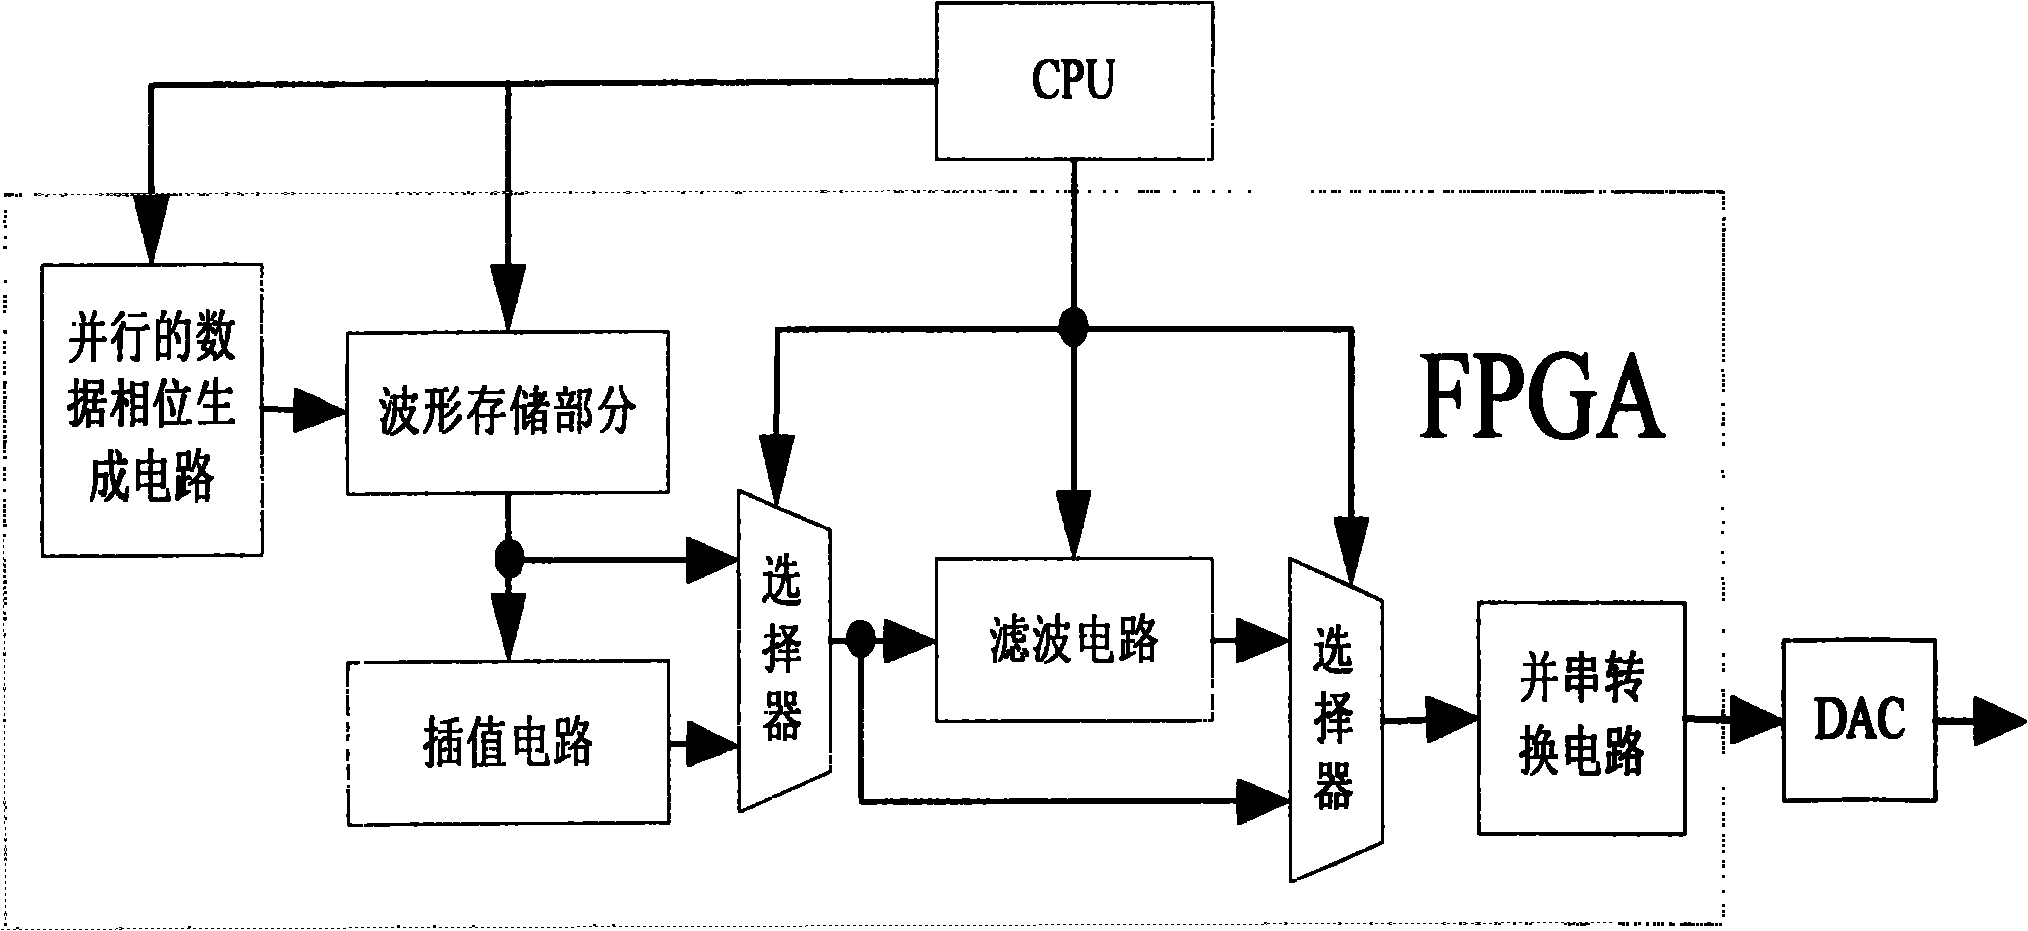 High speed arbitrary waveform generator based on FPGA